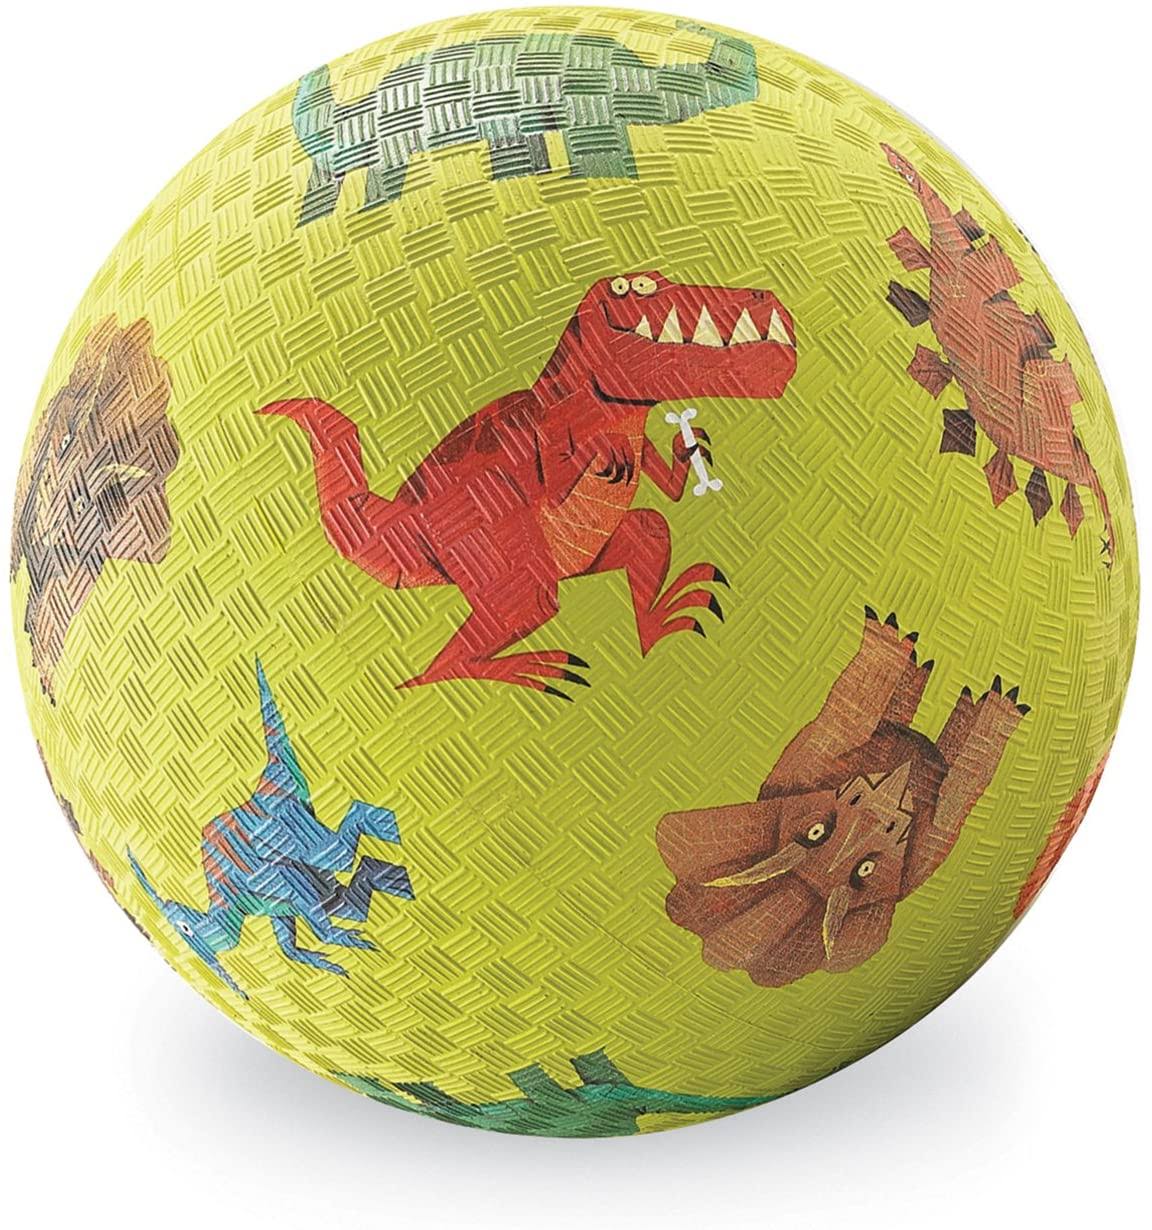 Crocodile Creek Playground Ball Dinosaur - Green